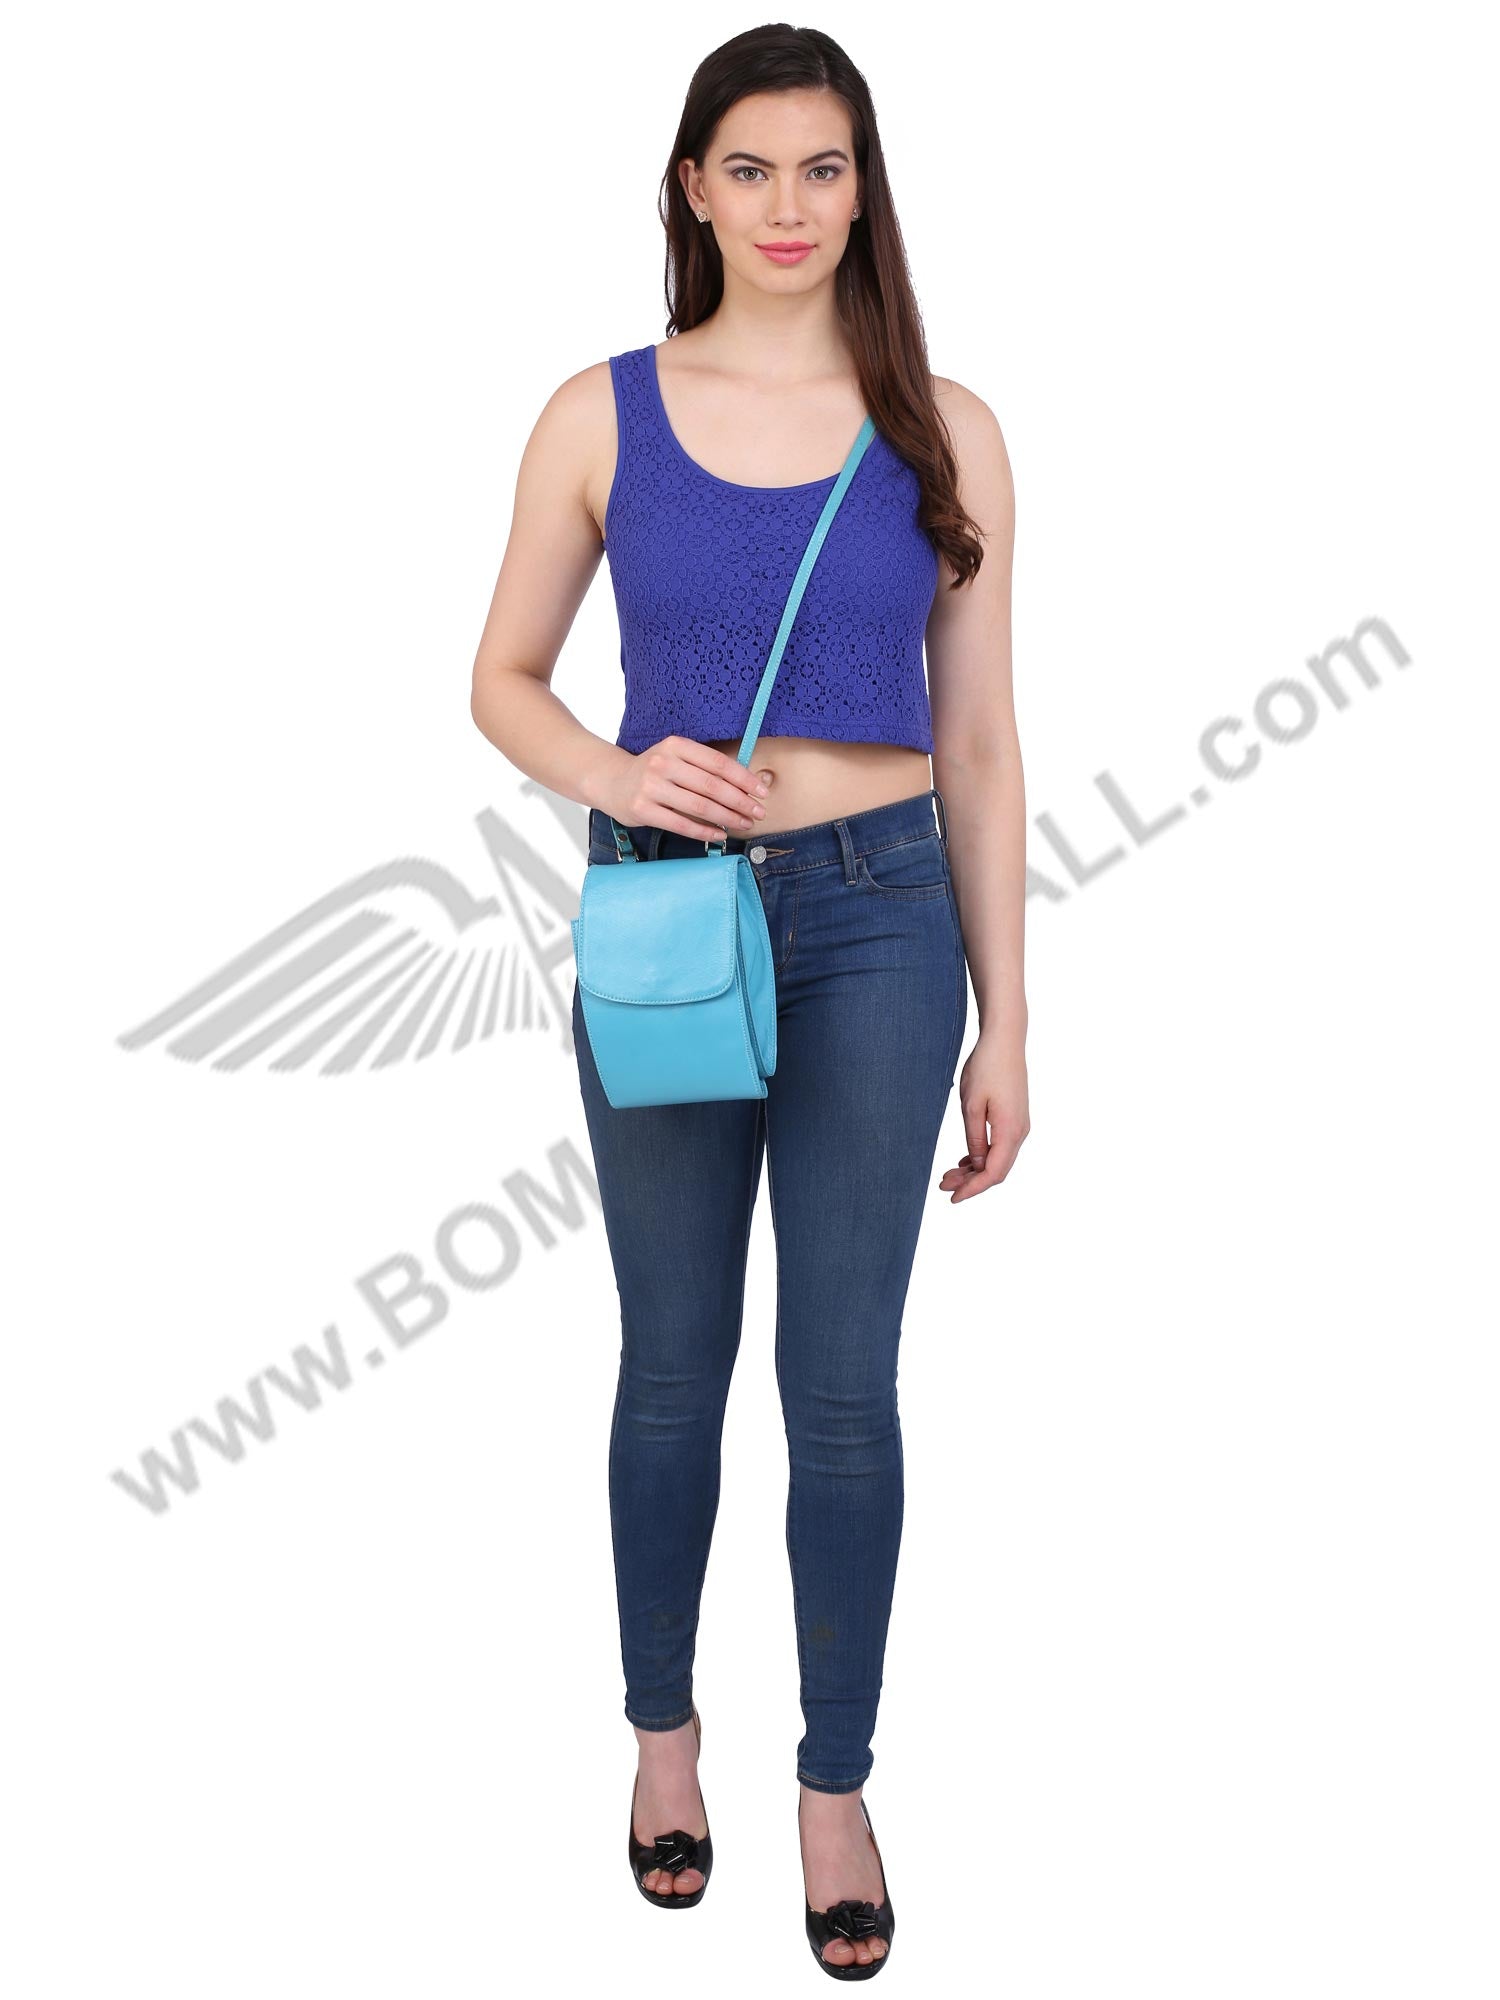 model posing with stylish blue CROSS BODY HAND BAG